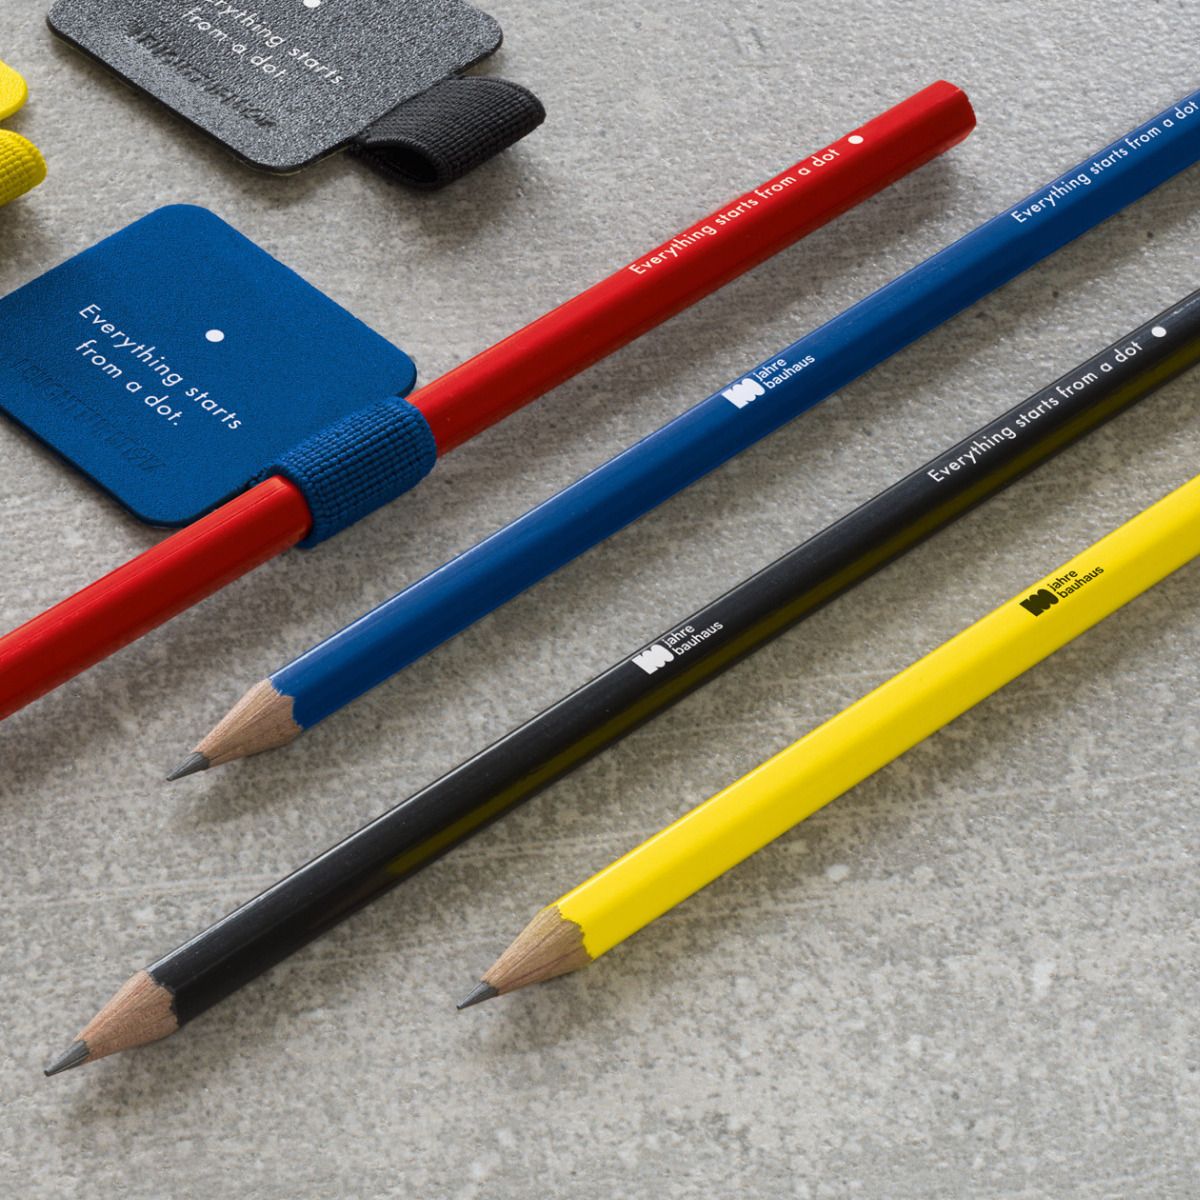 Bauhaus Pencils